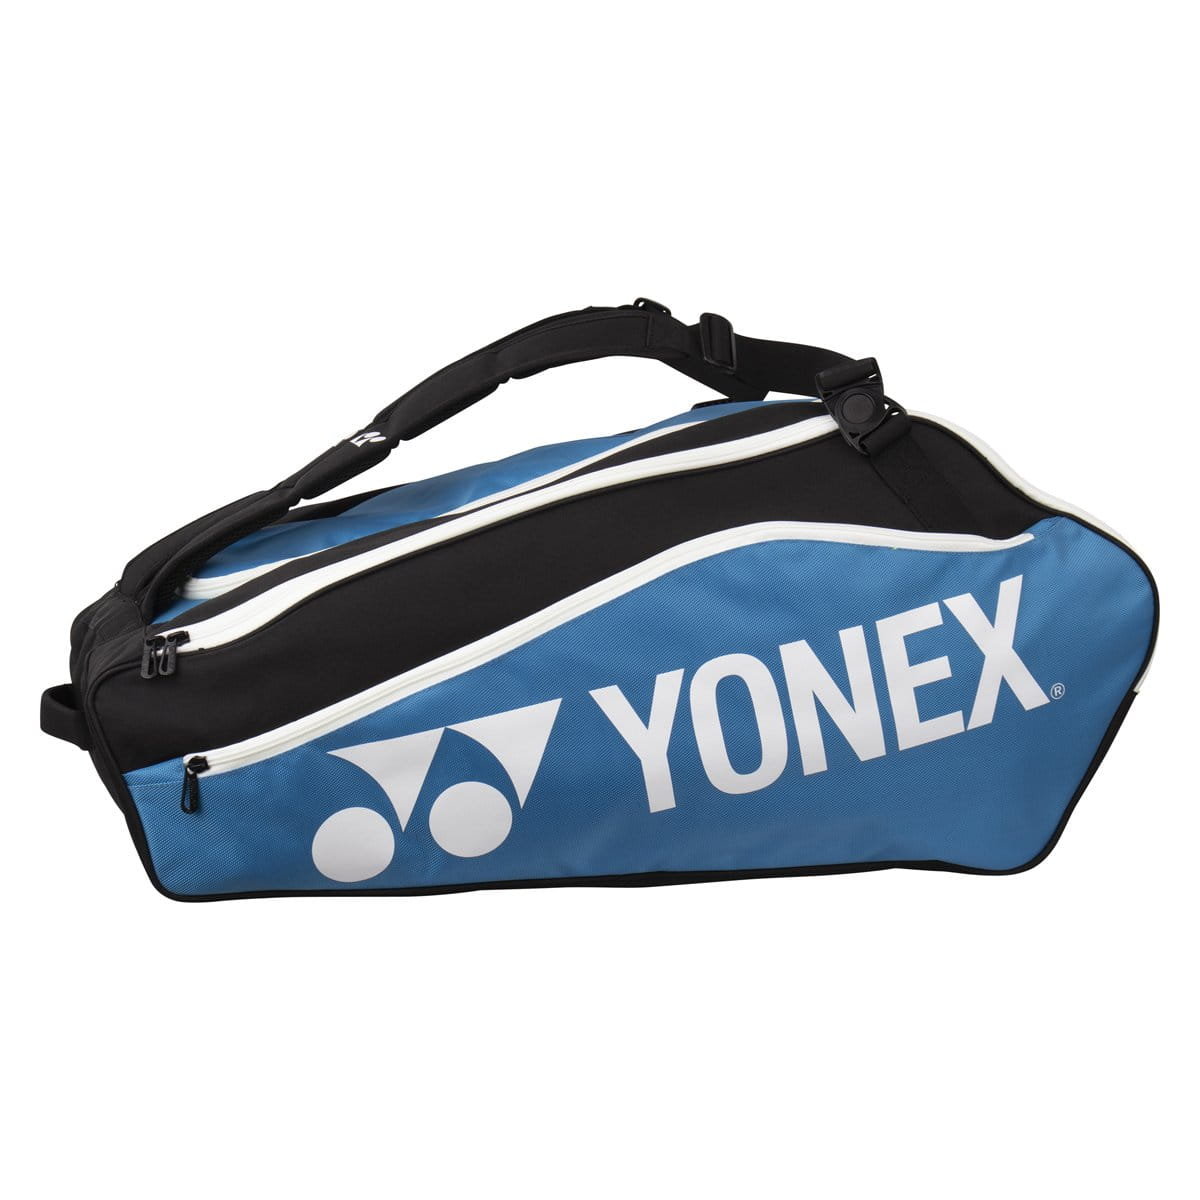 Torba Tenisowa Yonex Club Racket Bag X 12 Black/Blue